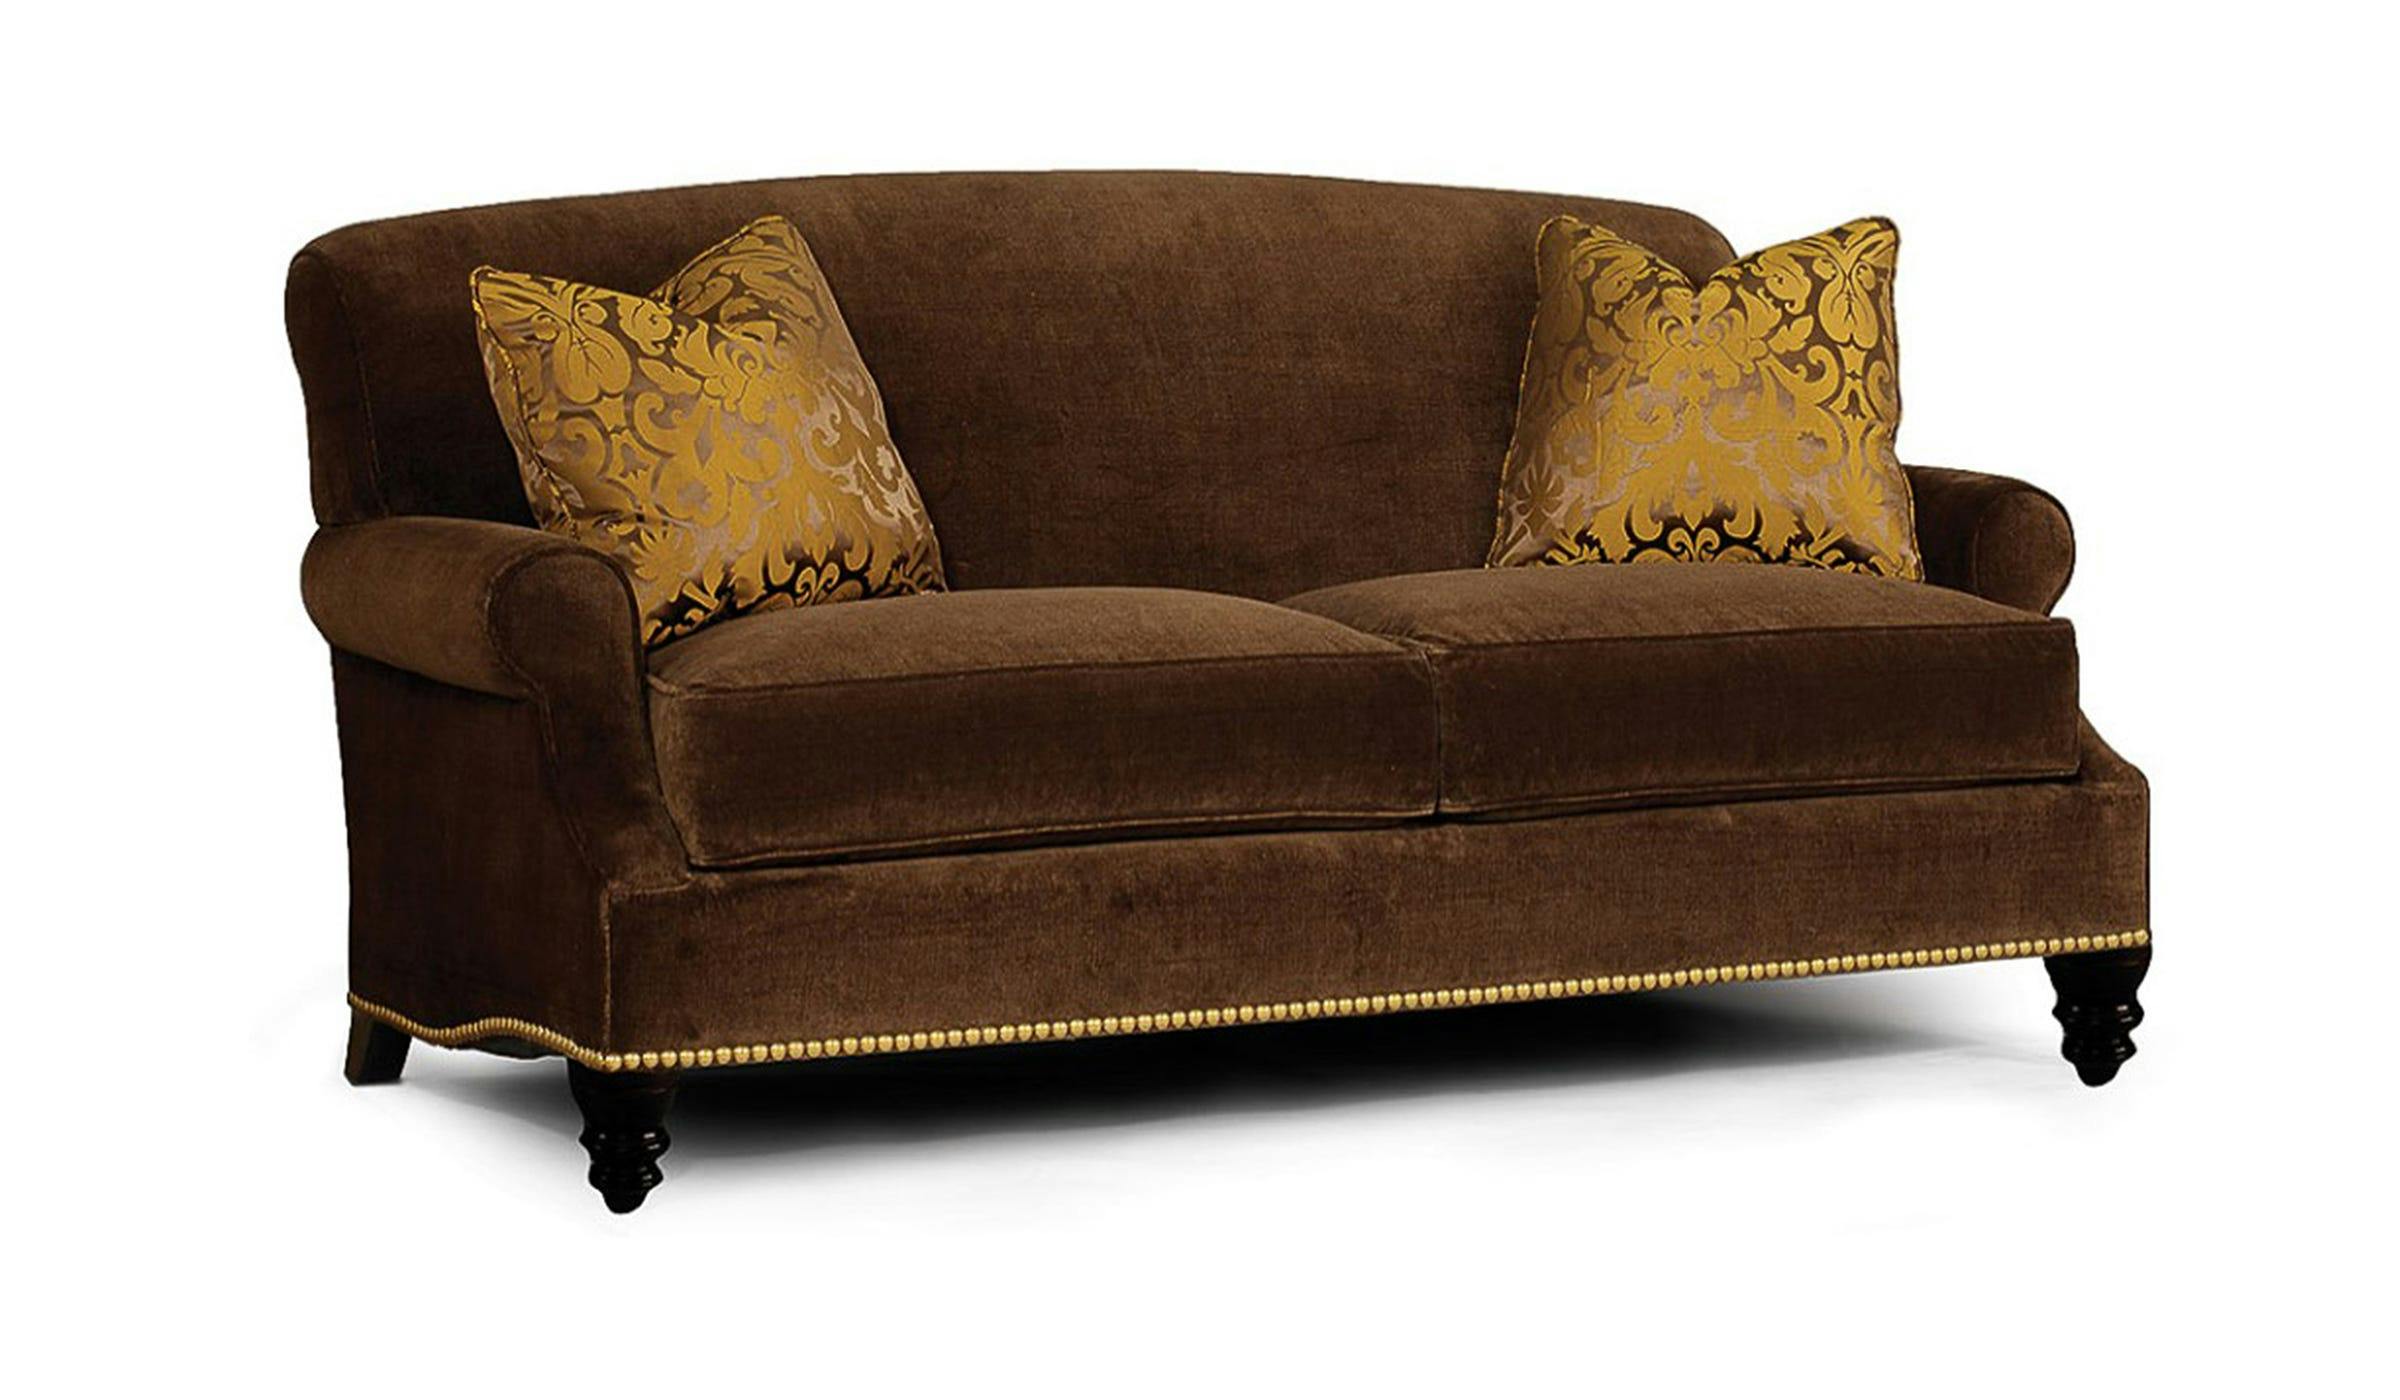 harris sofa at american leather